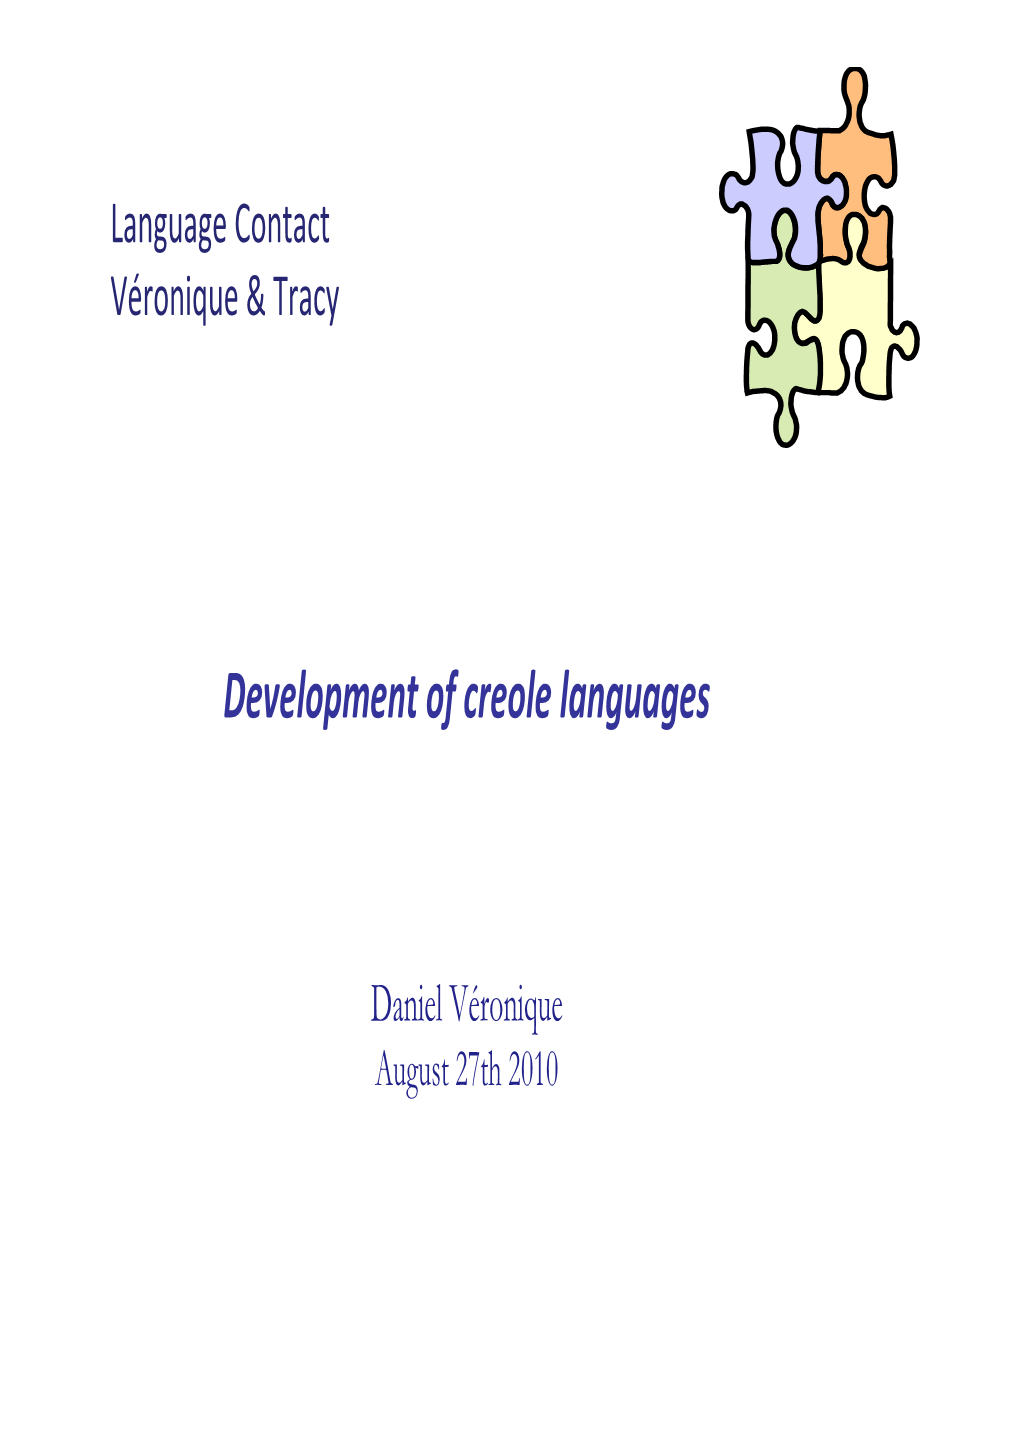 Development of Creole Languages